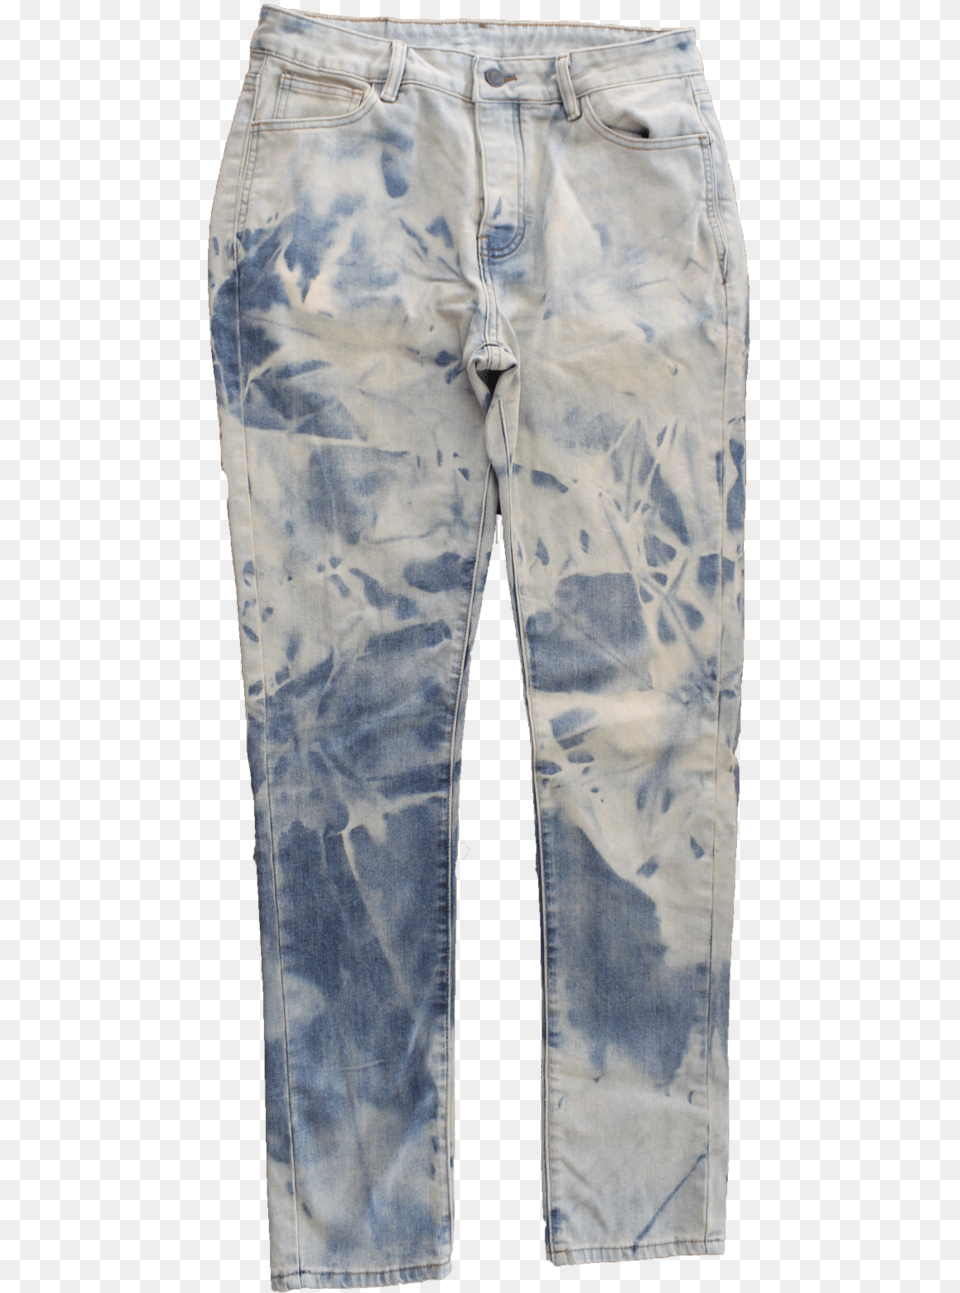 Pocket, Clothing, Jeans, Pants, Shorts Png Image